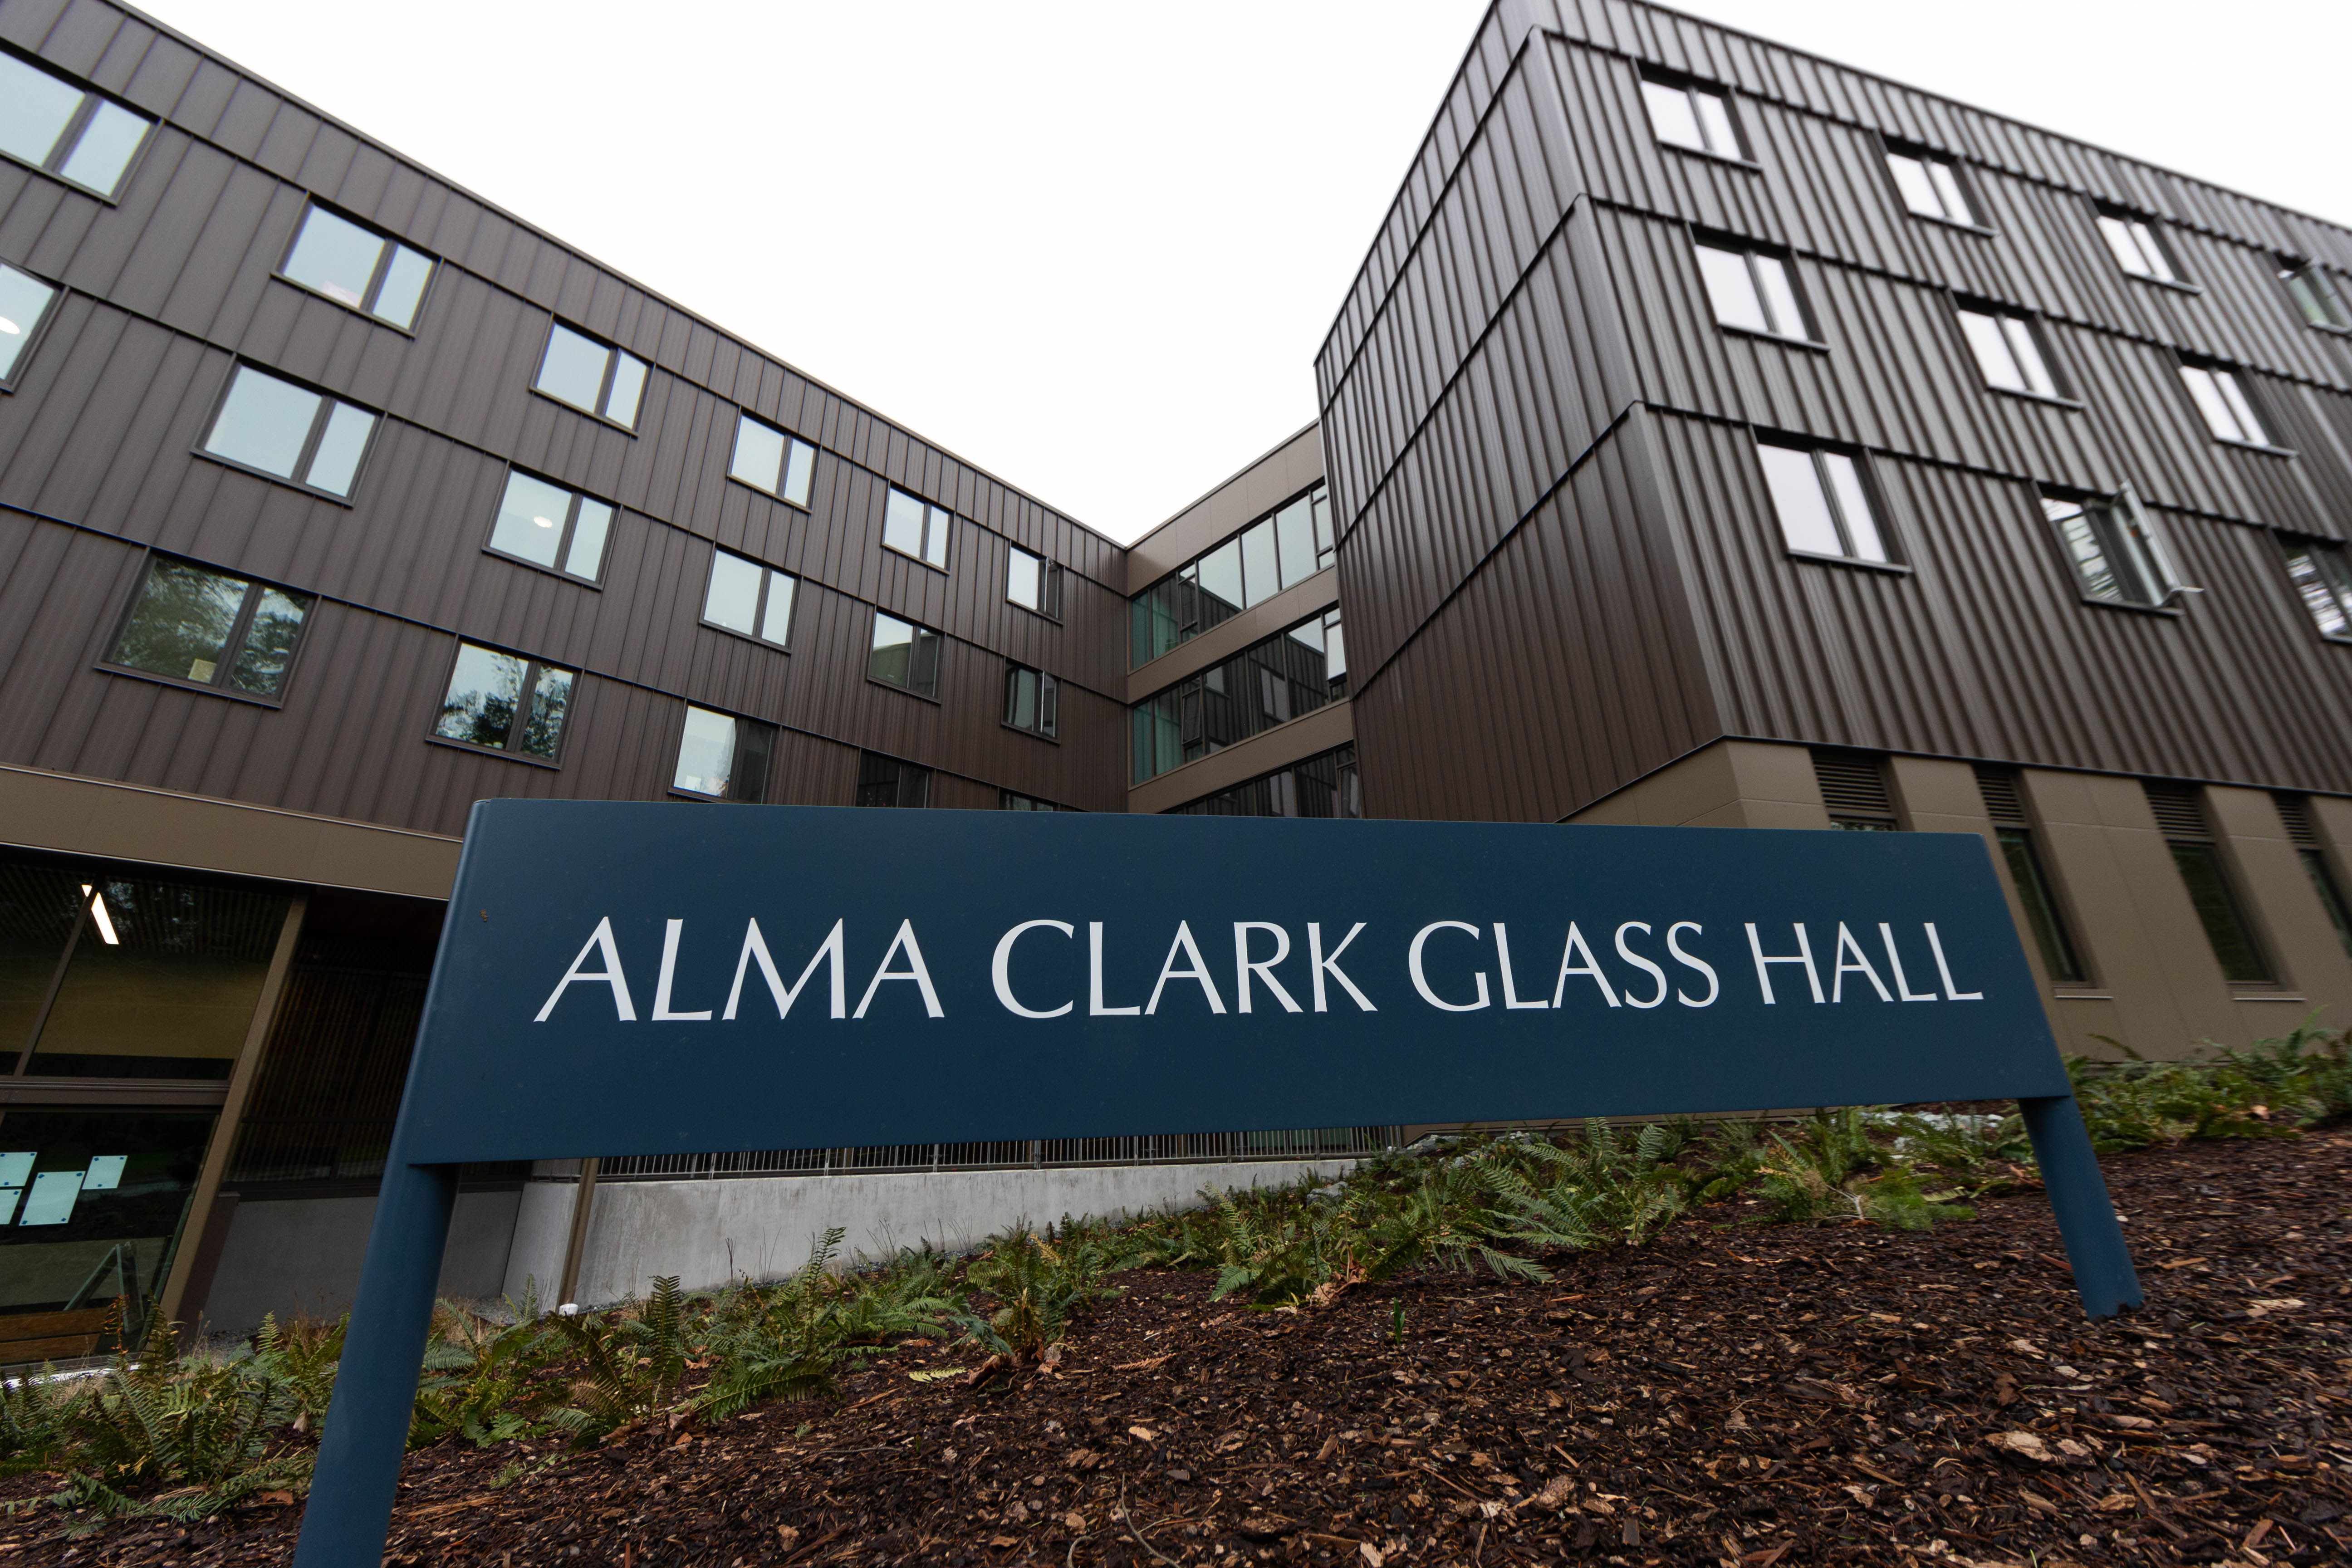 Exterior of Alma Clark